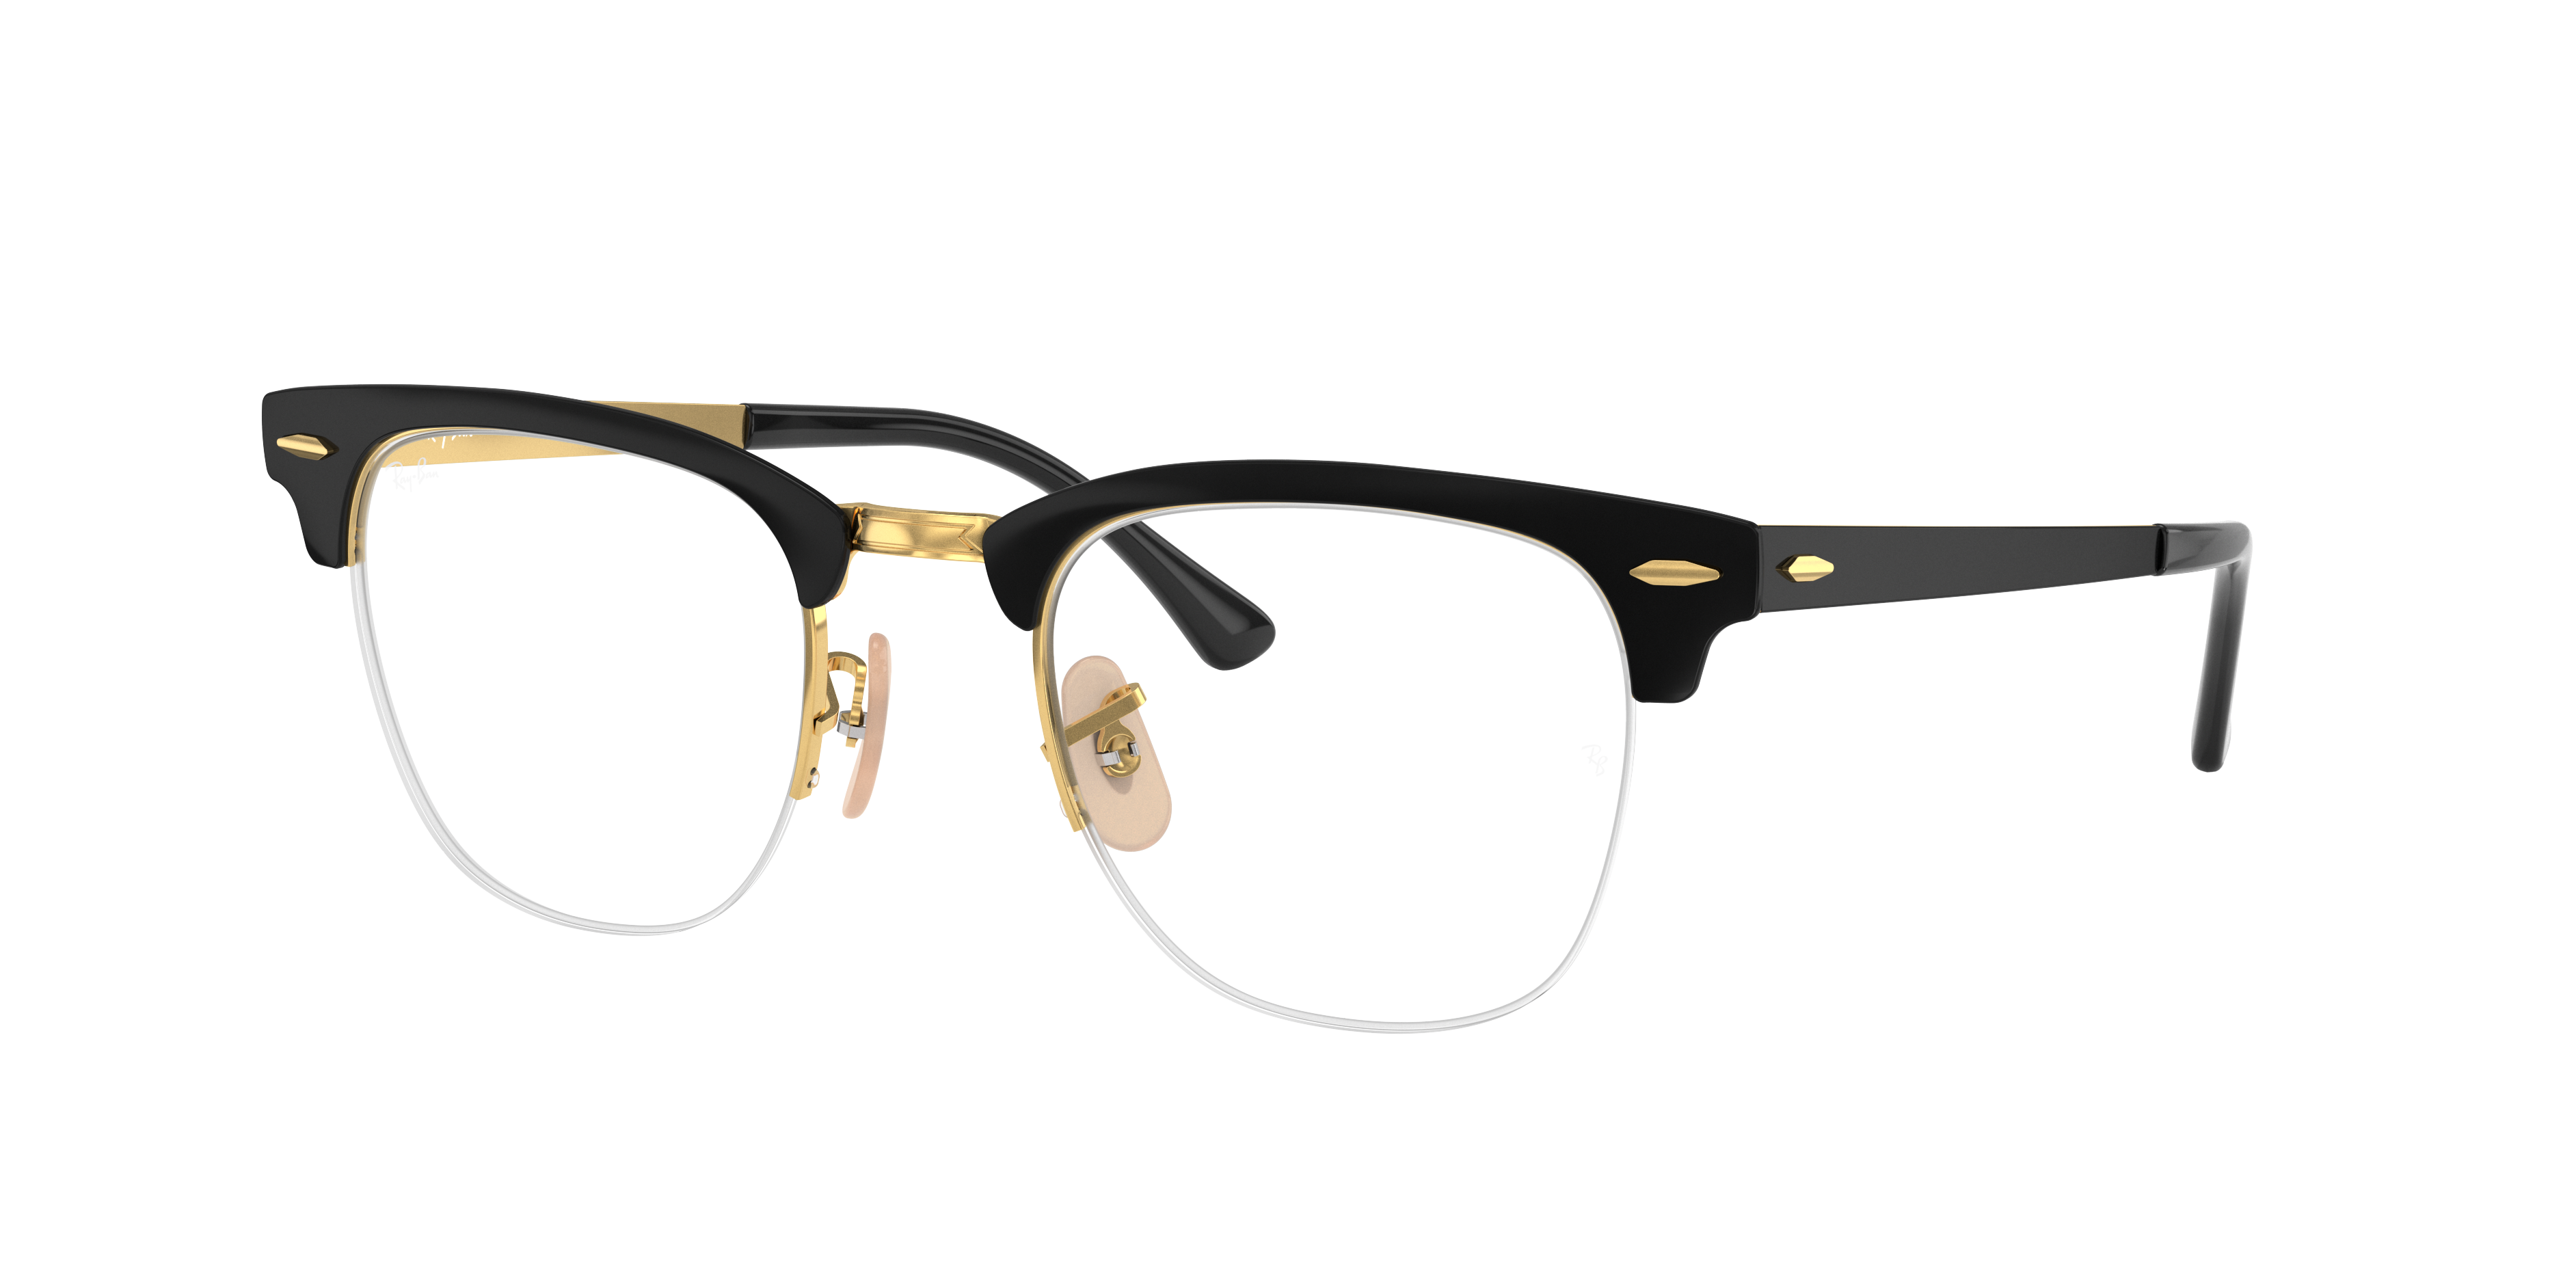 Clubmaster Metal Optics Eyeglasses with Black On Gold Frame | Ray-Ban®